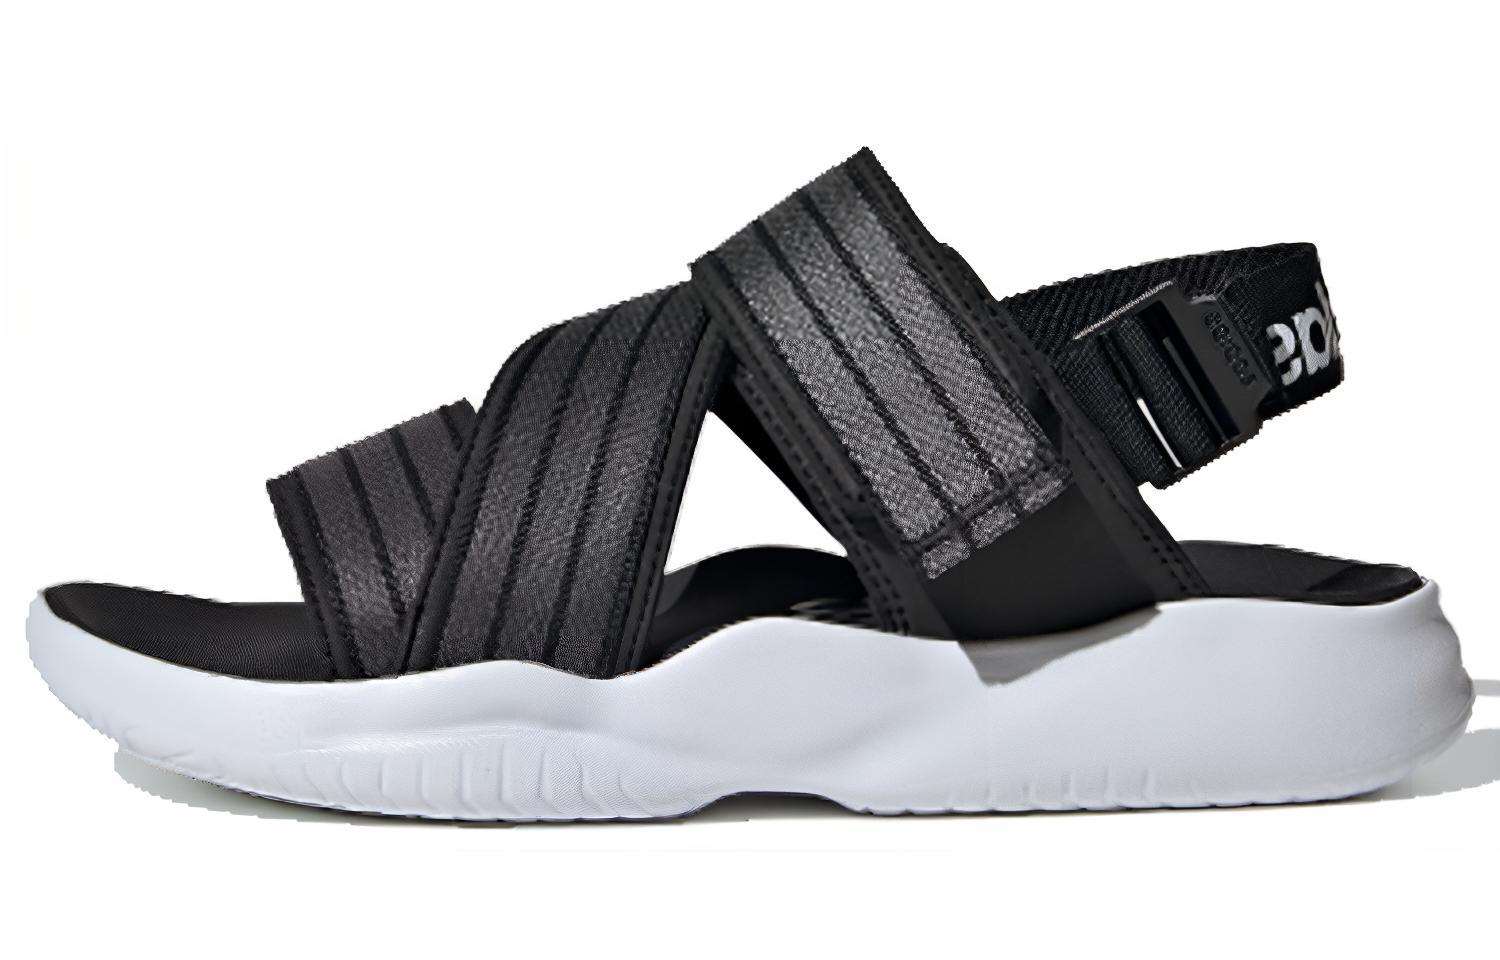 Adidas 90s Sandal